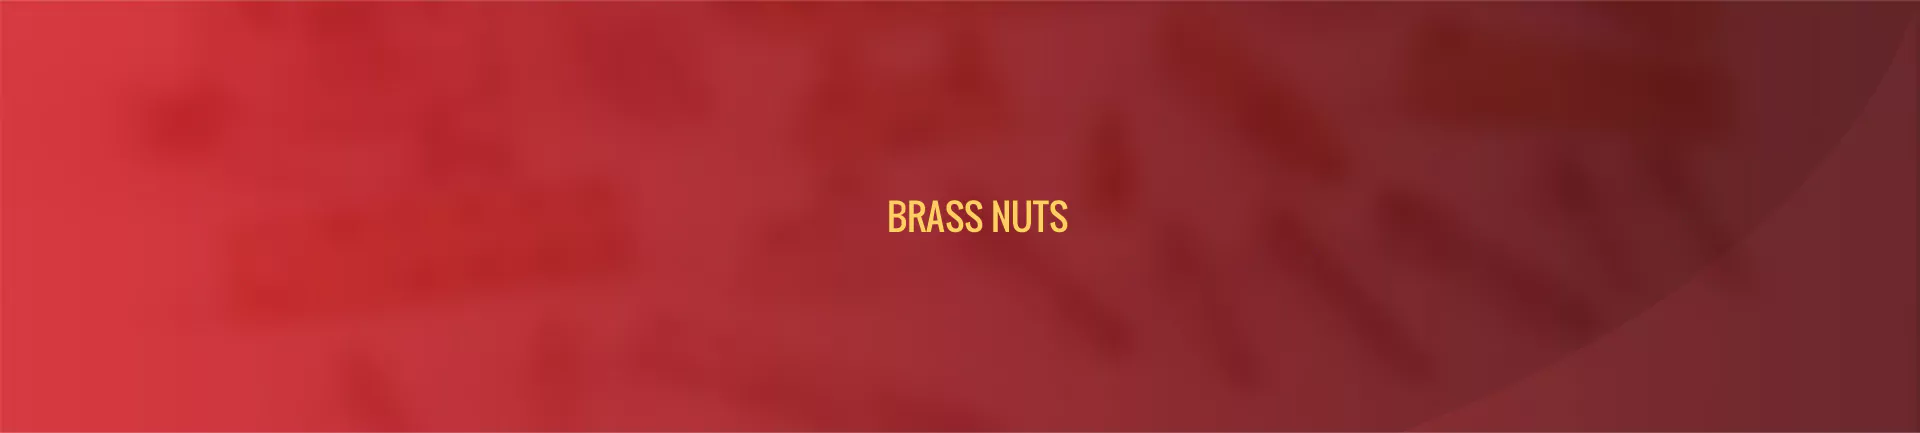 brass-nuts-banner